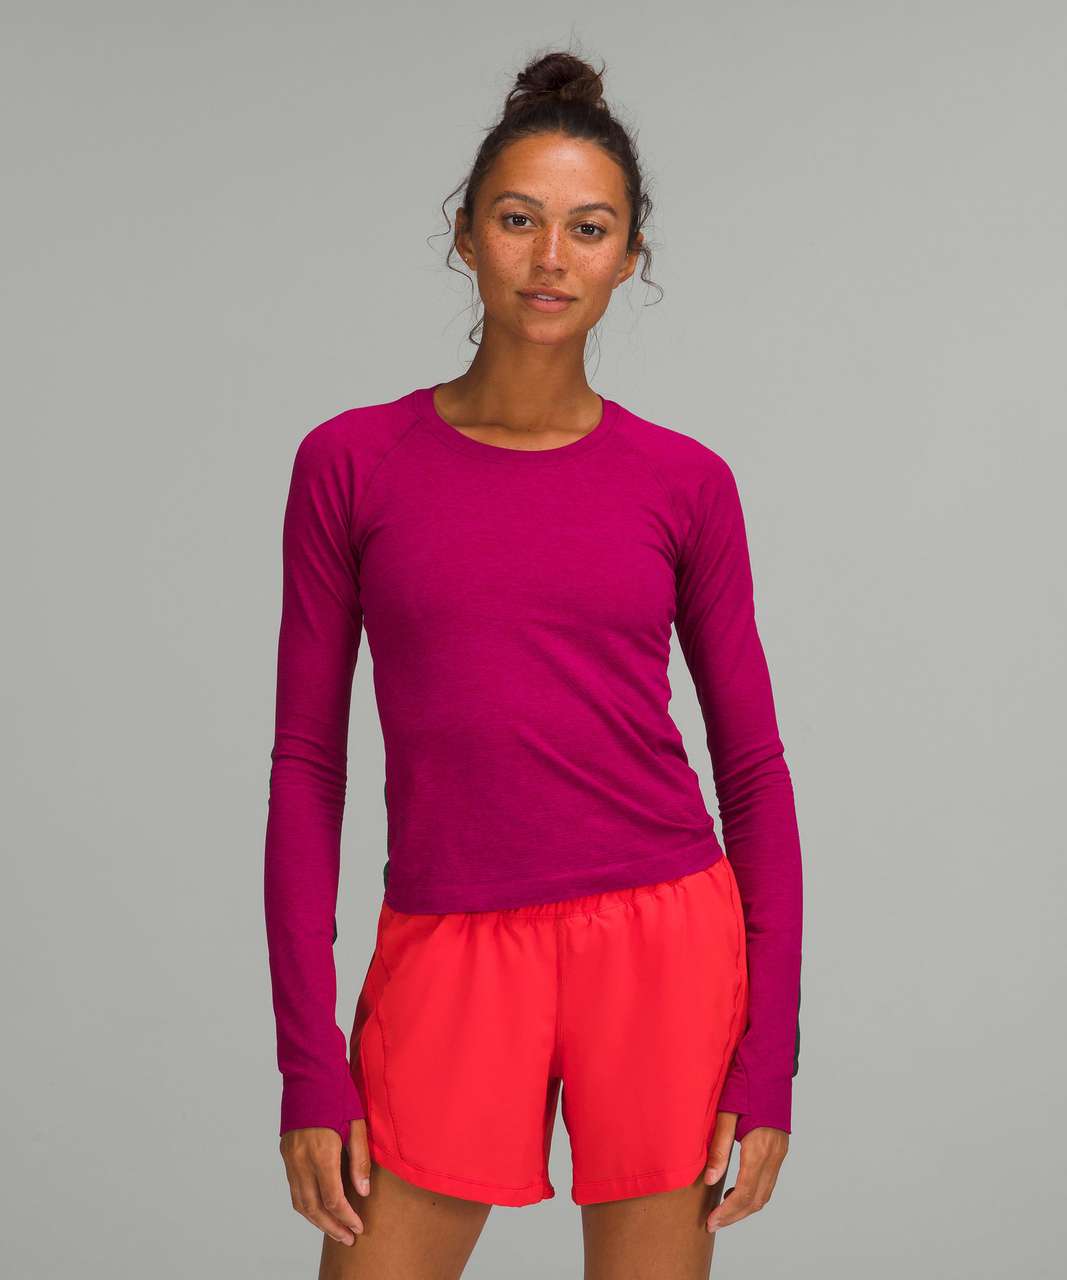 lululemon athletica Swiftly Tech Long-sleeve Shirt 2.0 Race Length in  Purple